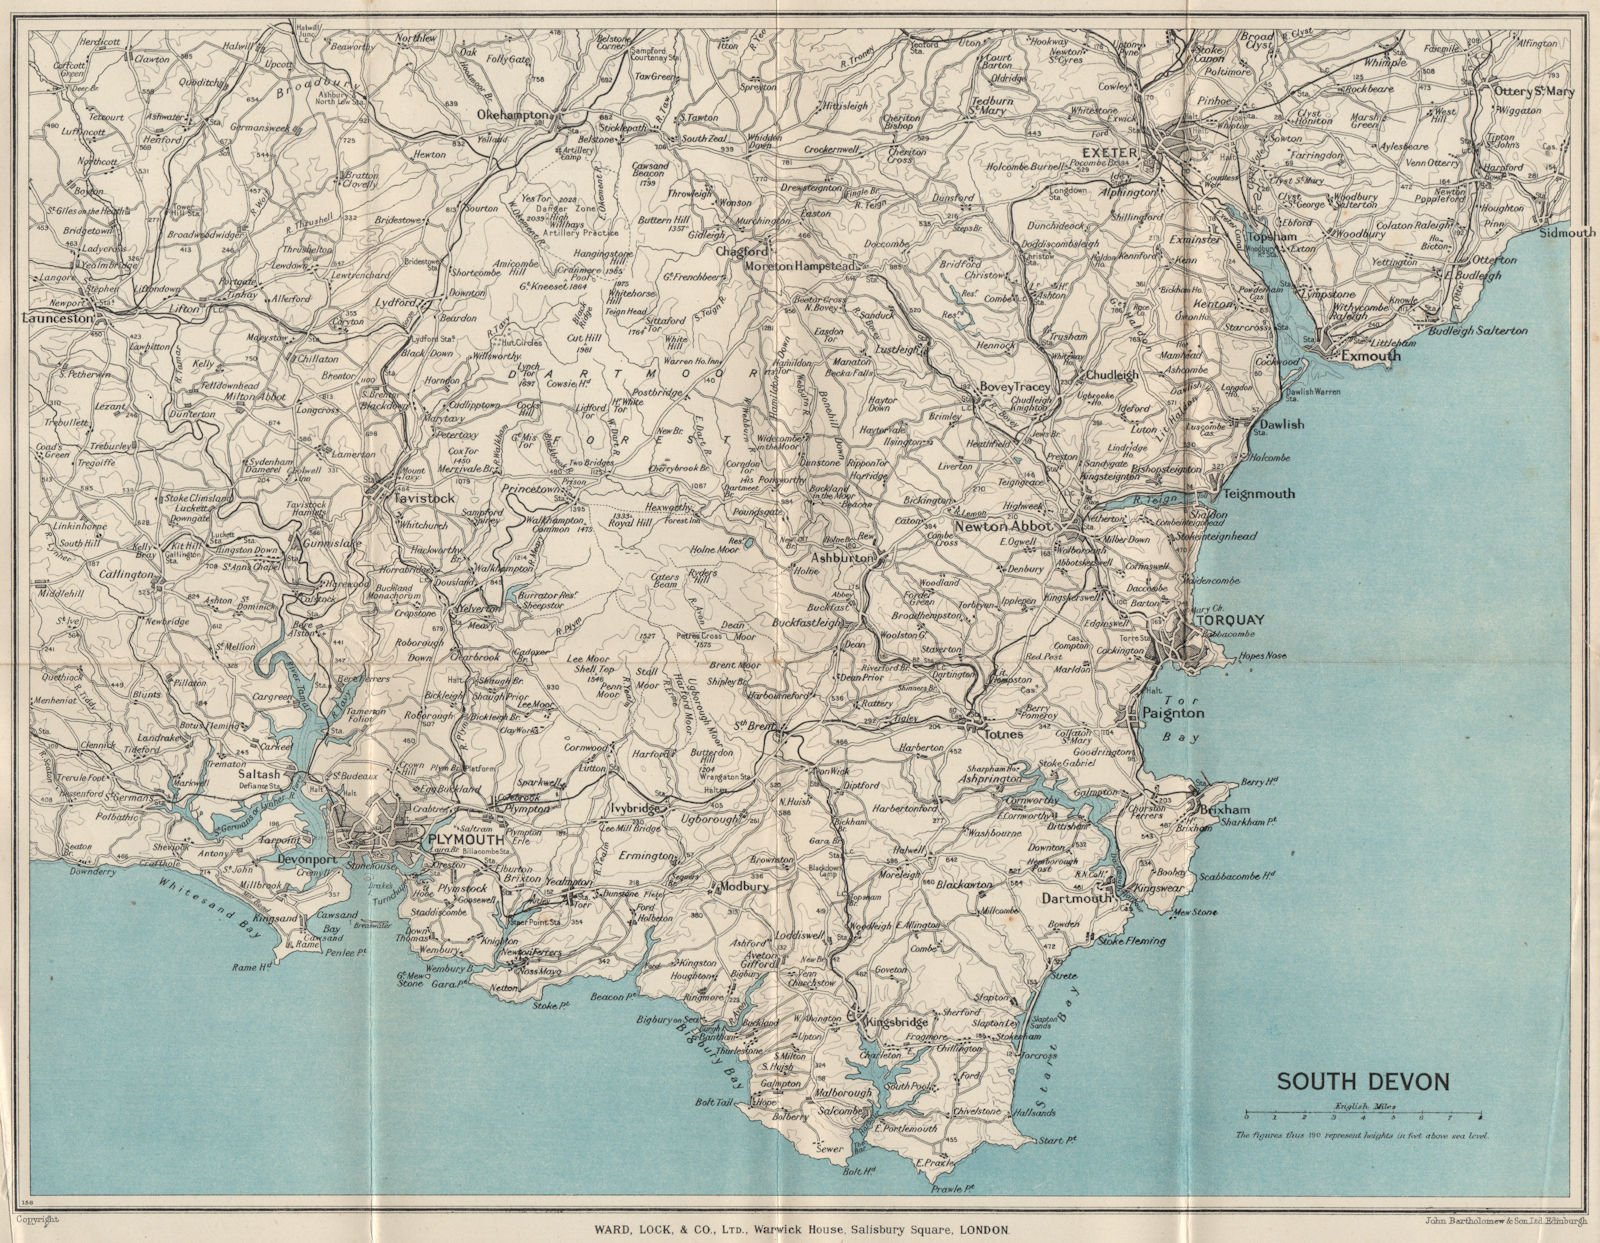 SOUTH DEVON. Dartmoor South Hams Torquay Tamar Valley Exeter Plymouth 1948 map